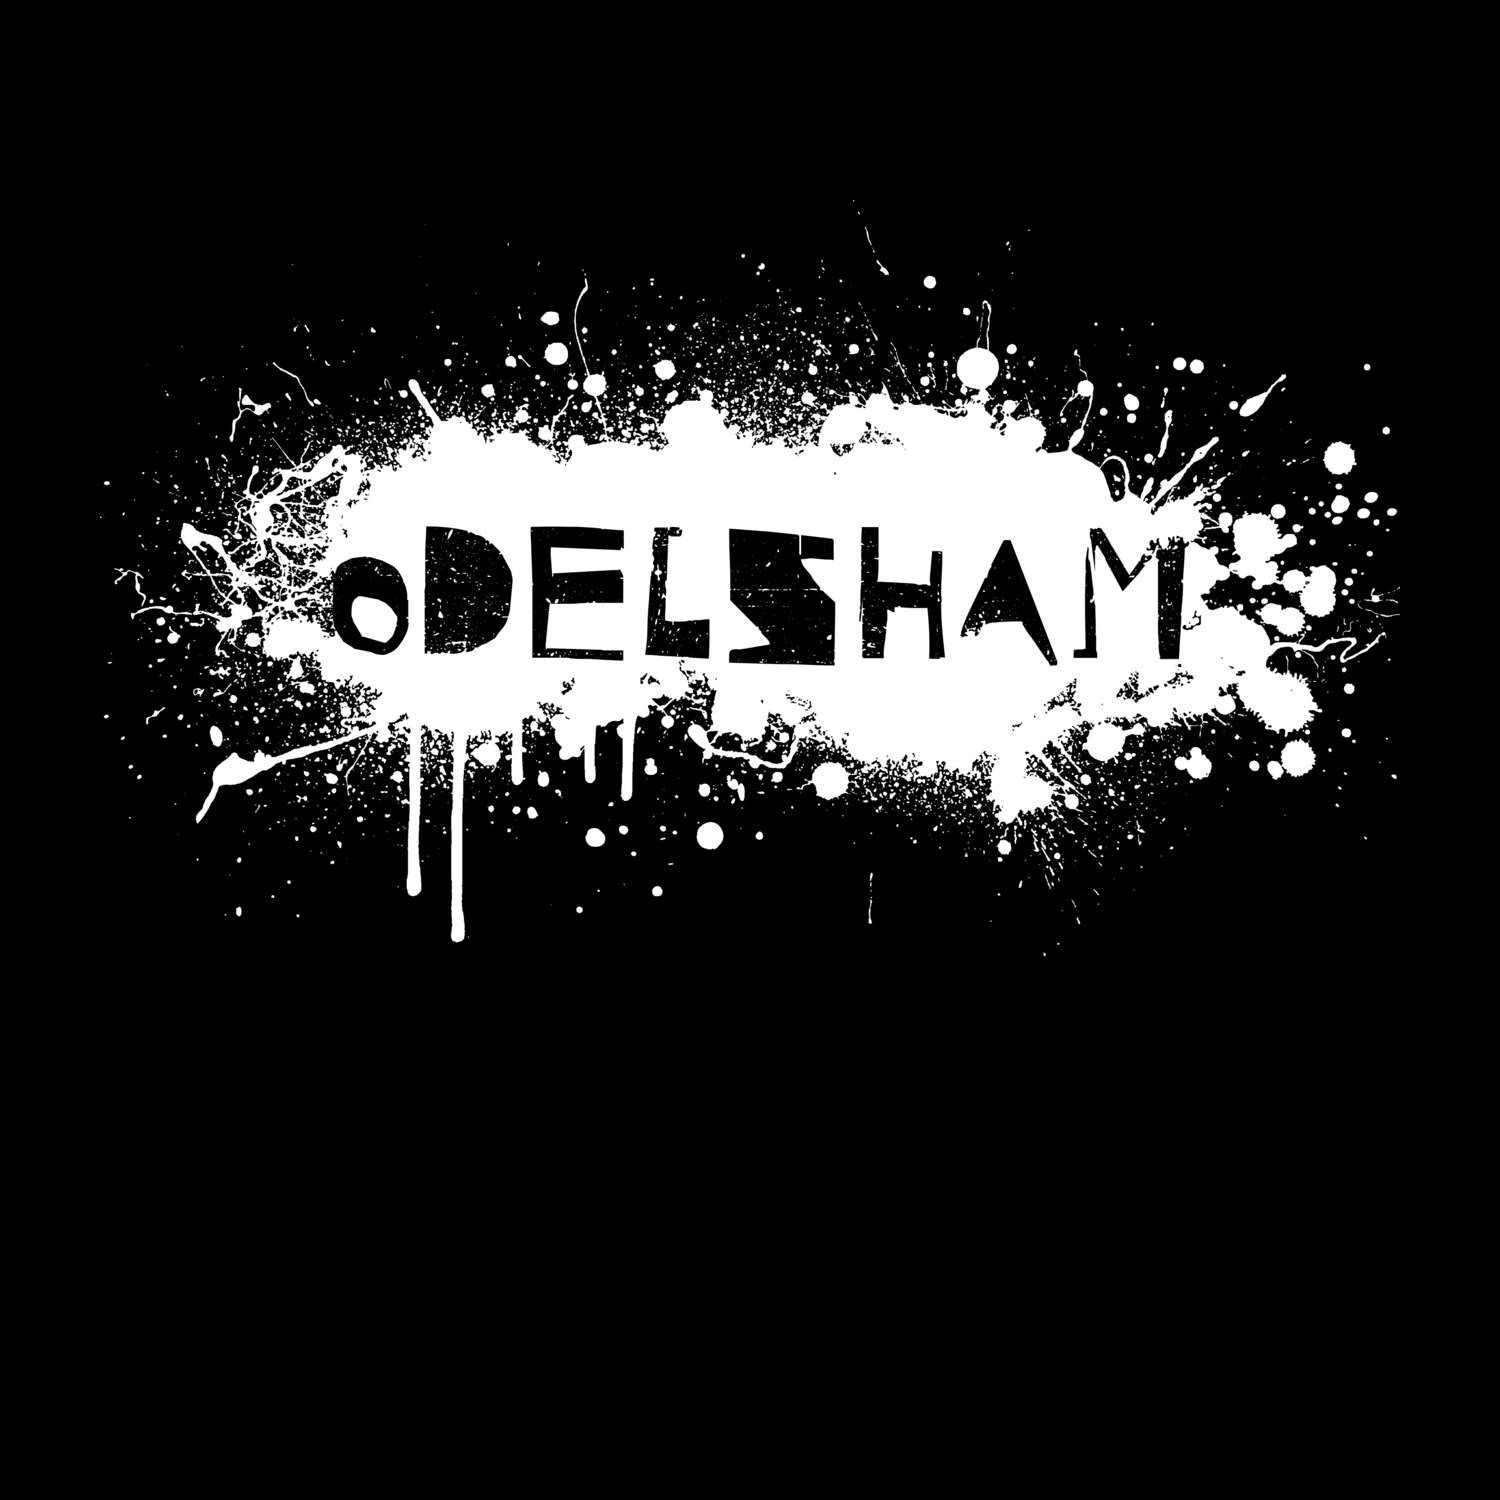 Odelsham T-Shirt »Paint Splash Punk«